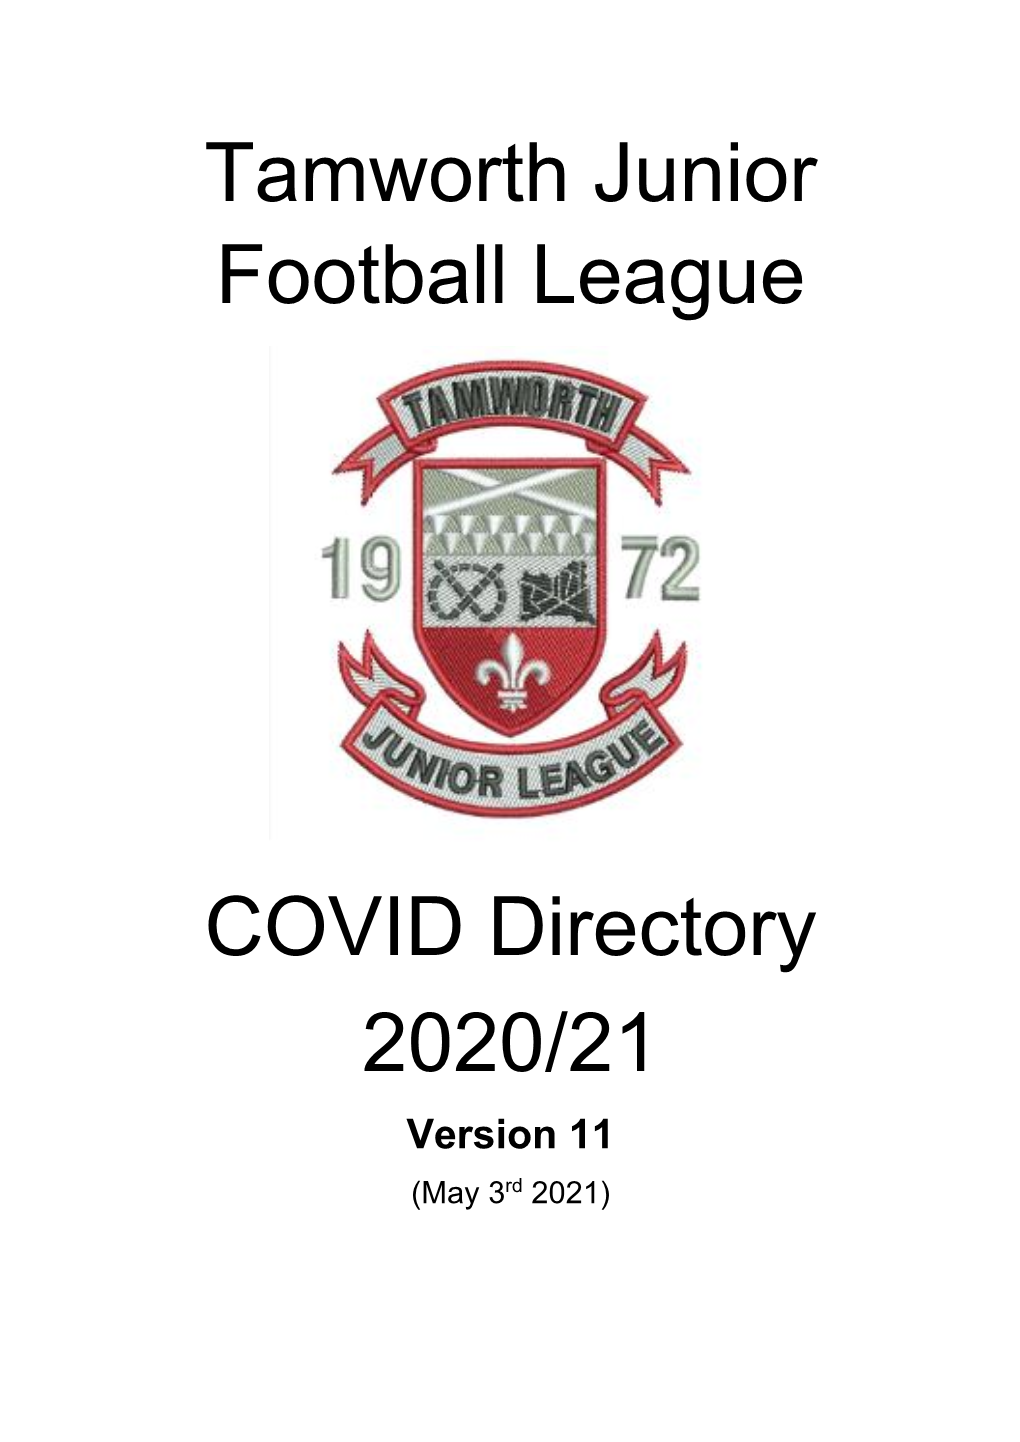 Tamworth Junior Football League COVID Directory 2020/21